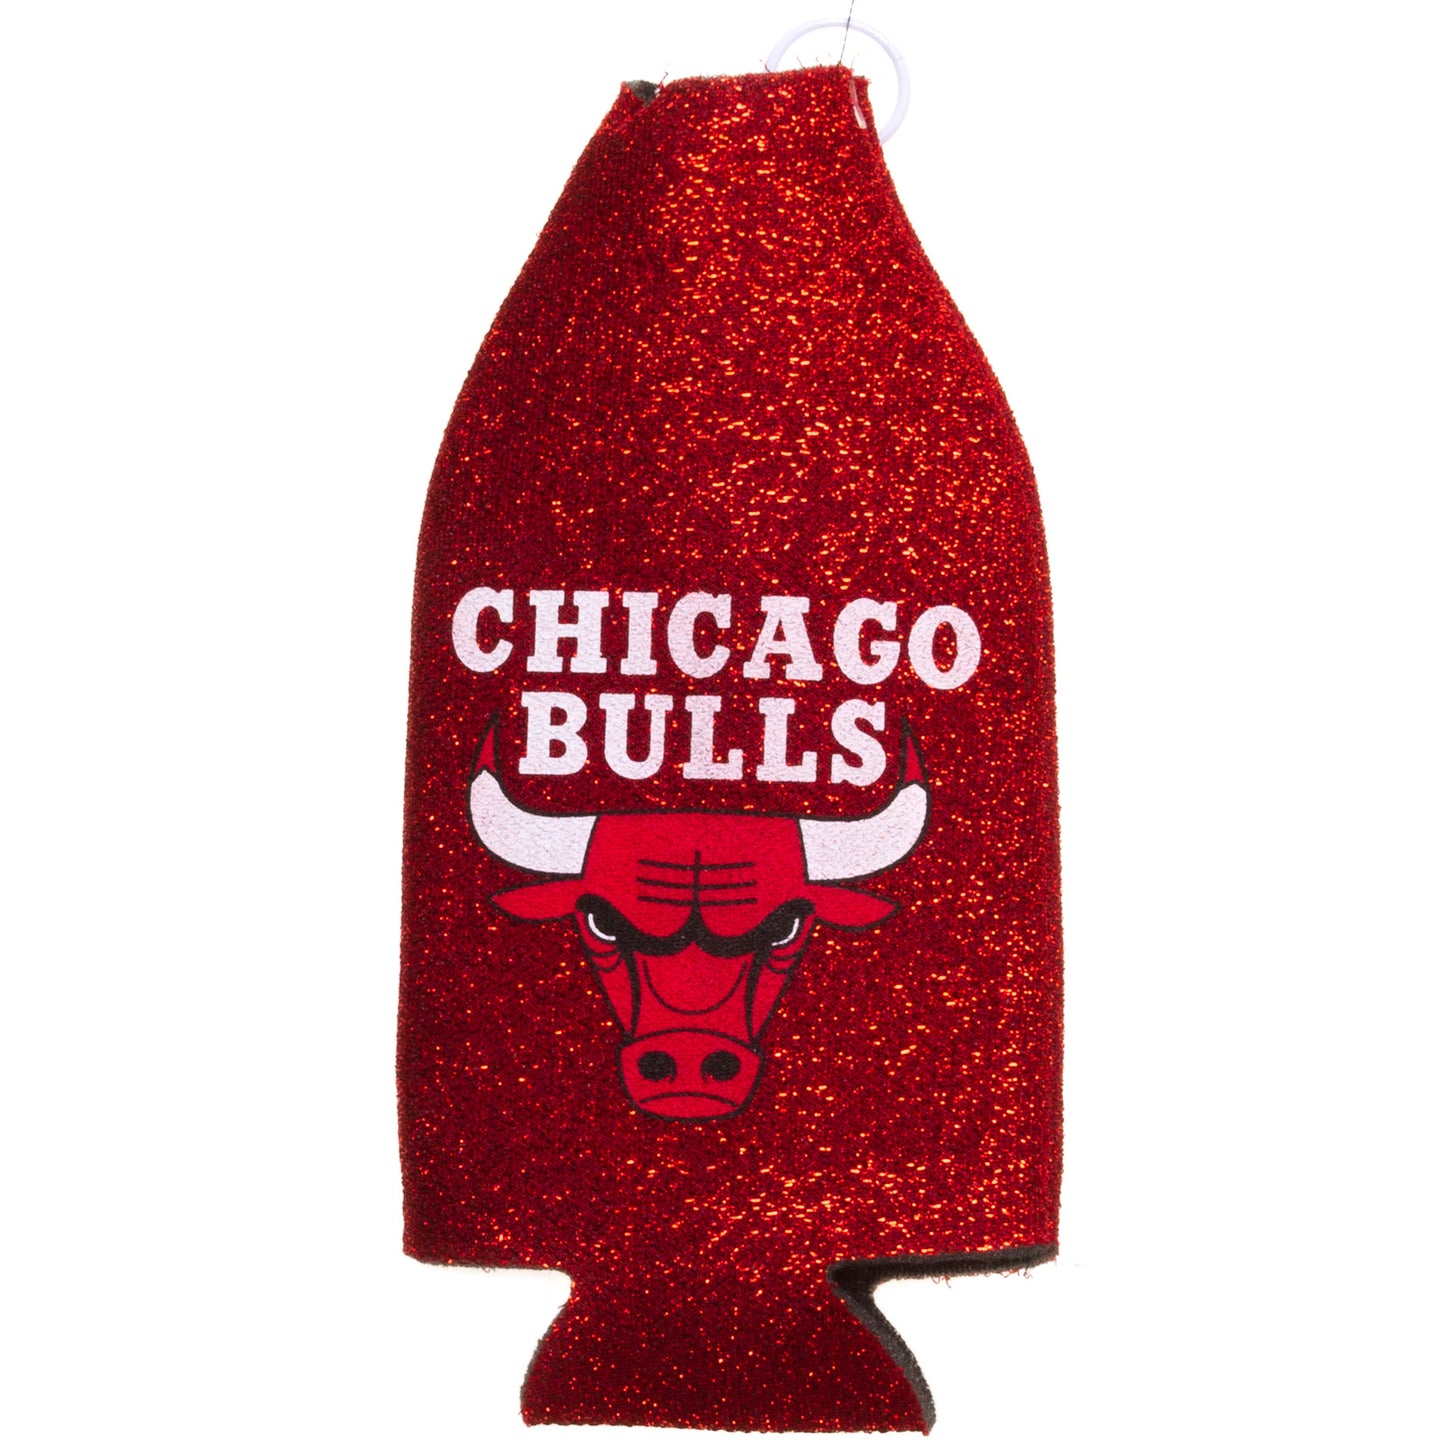 Chicago Bulls Red Glitter Bottle Coozie